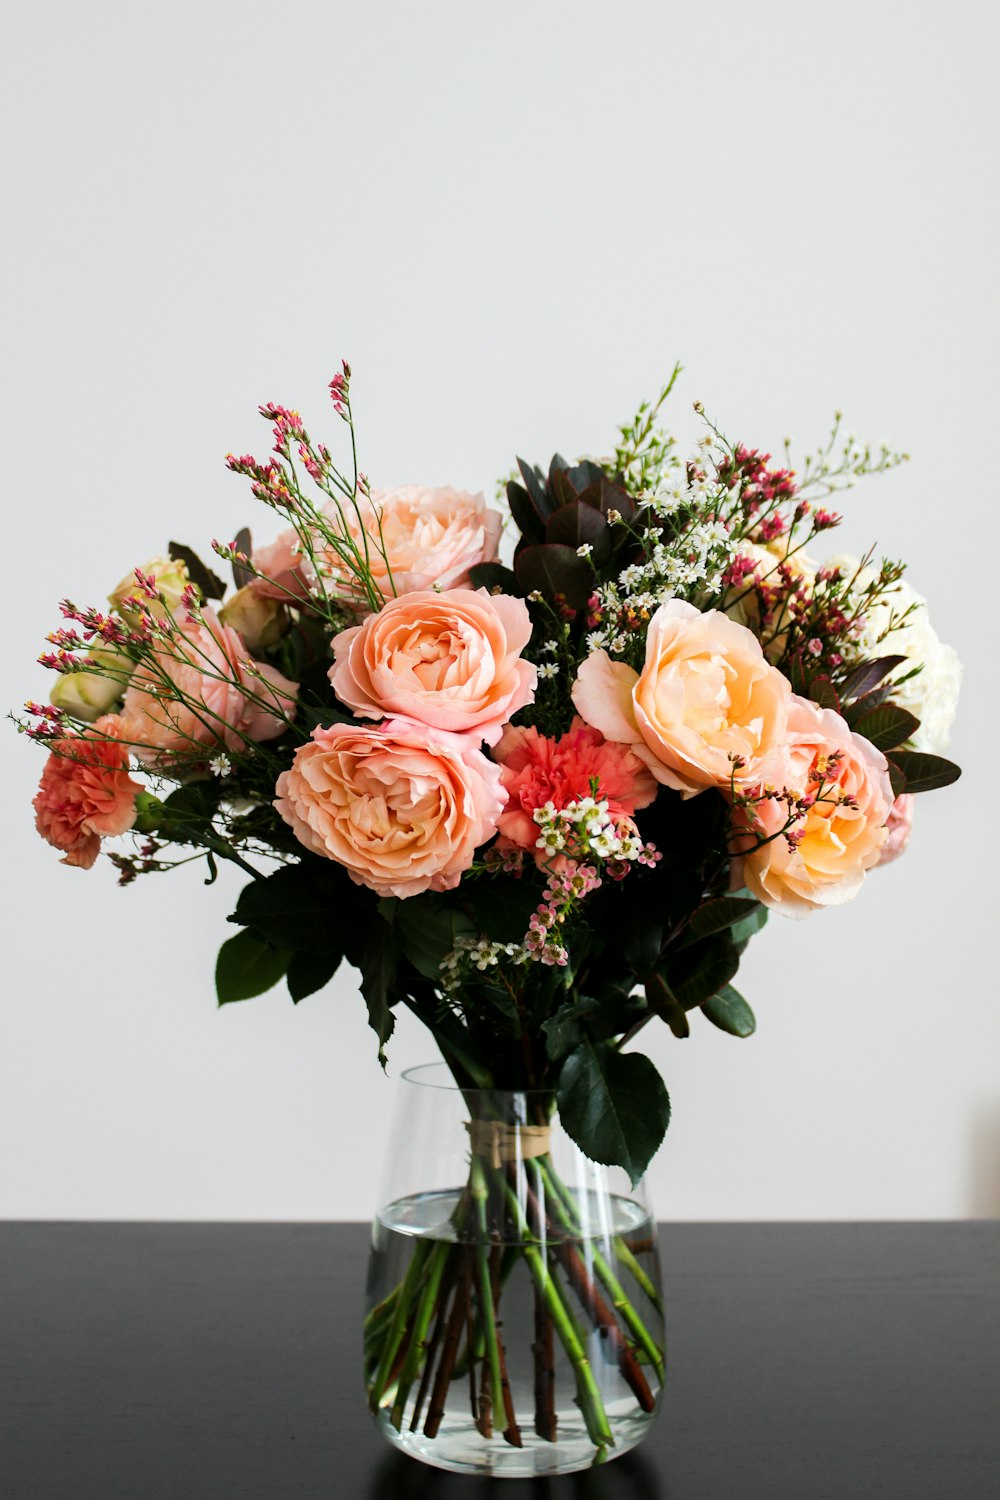 350+ Flower Bouquet Pictures | Download Free Images on Unsplash